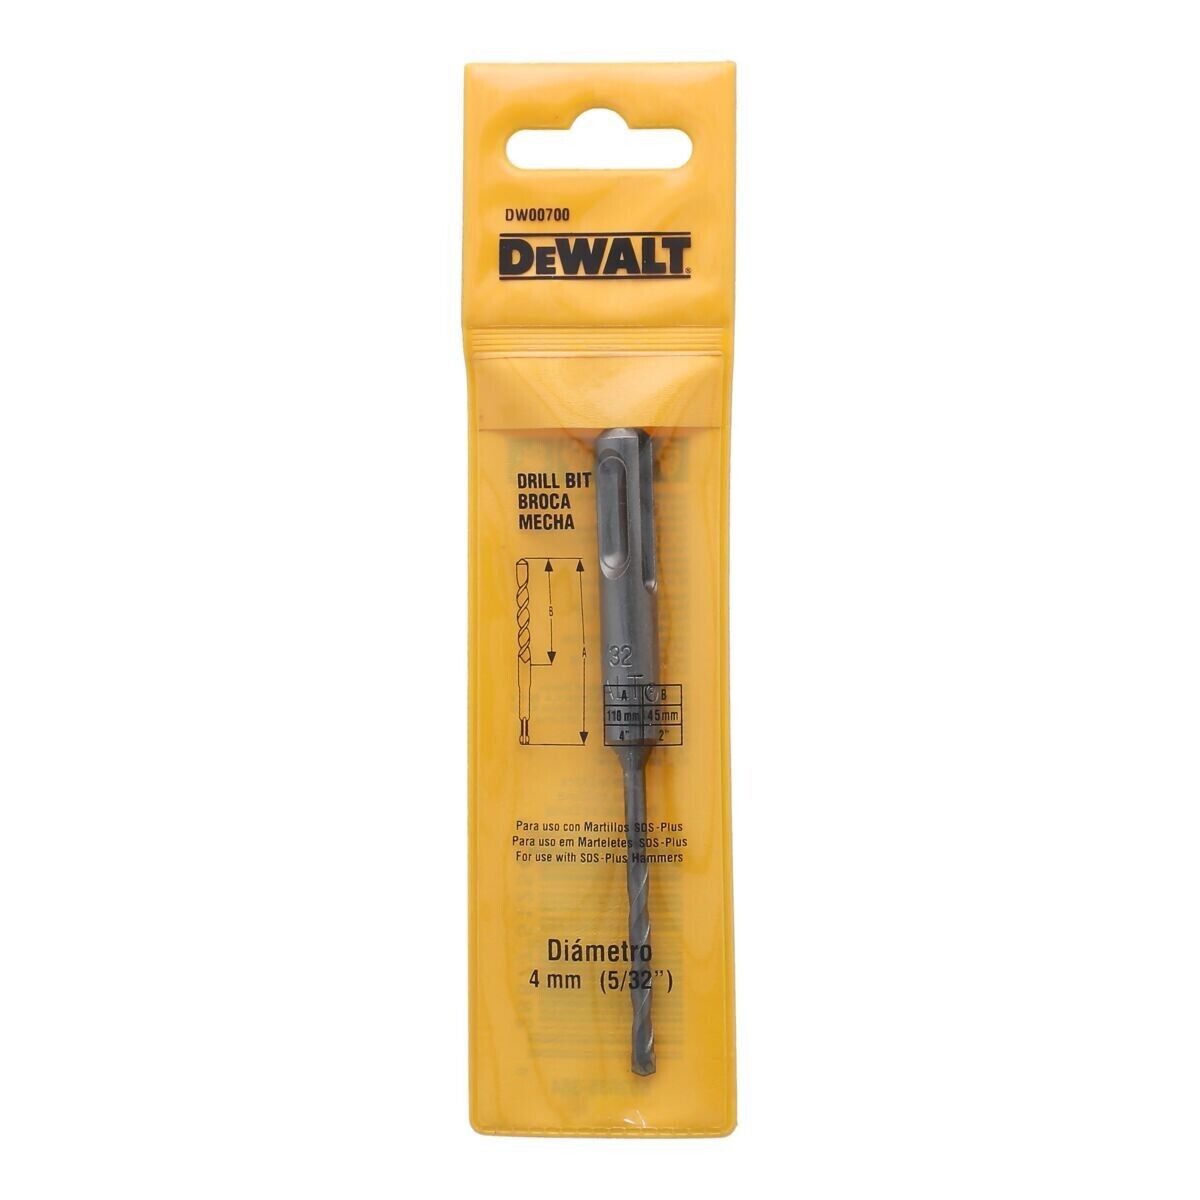 DEWALT DRILL BIT DW00700 4mm x 110mm rotary hammers with SDS plus holder UK Post